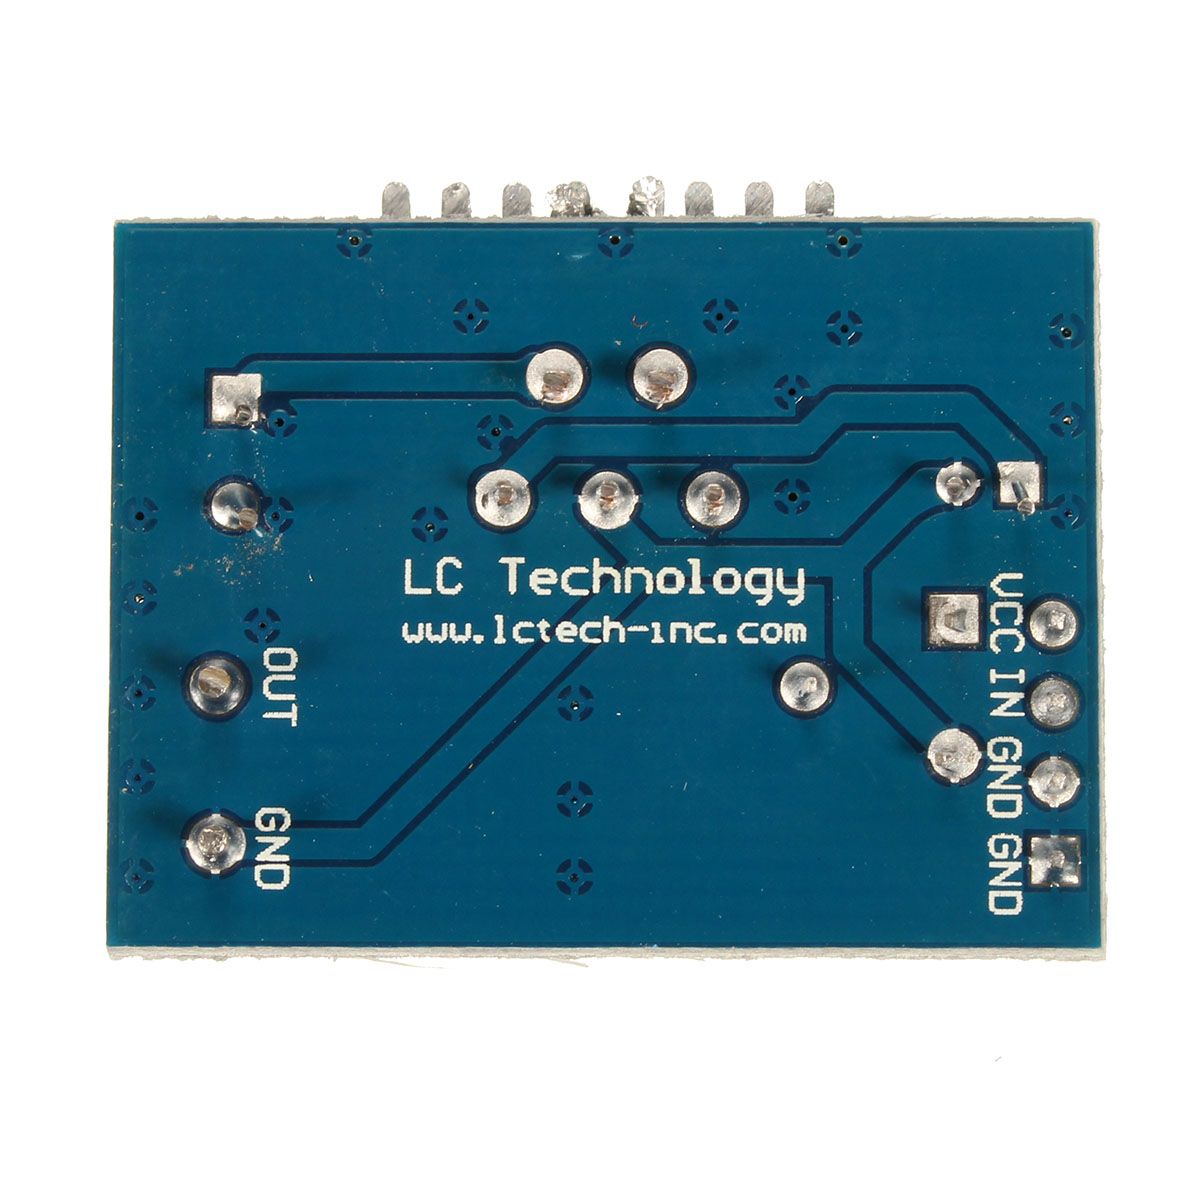 20pcs-TDA2030A-6-12V-ACDC-Single-Power-Supply-Audio-Amplifier-Board-Module-1388433